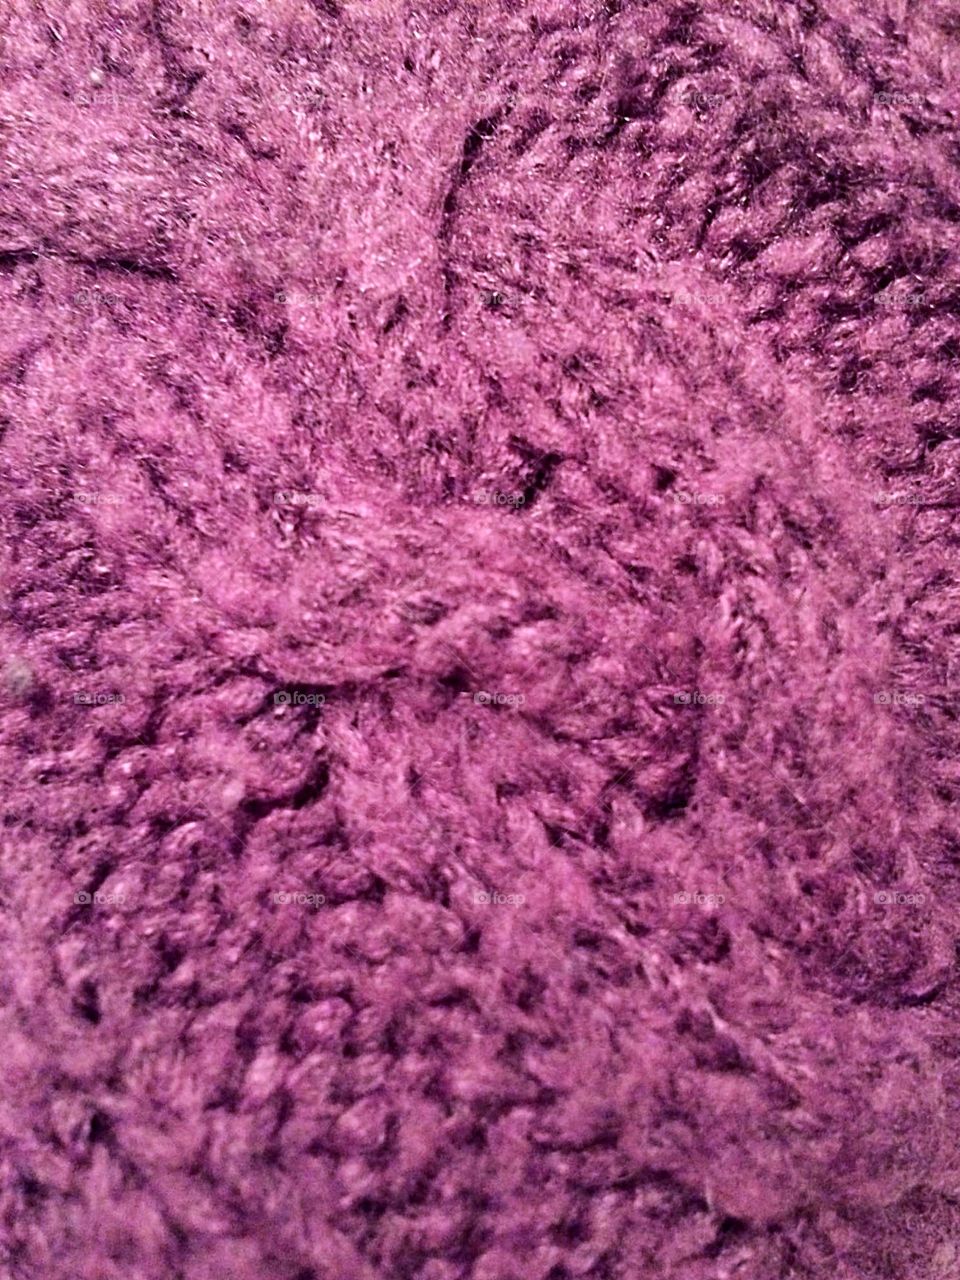 Full frame of purple wool